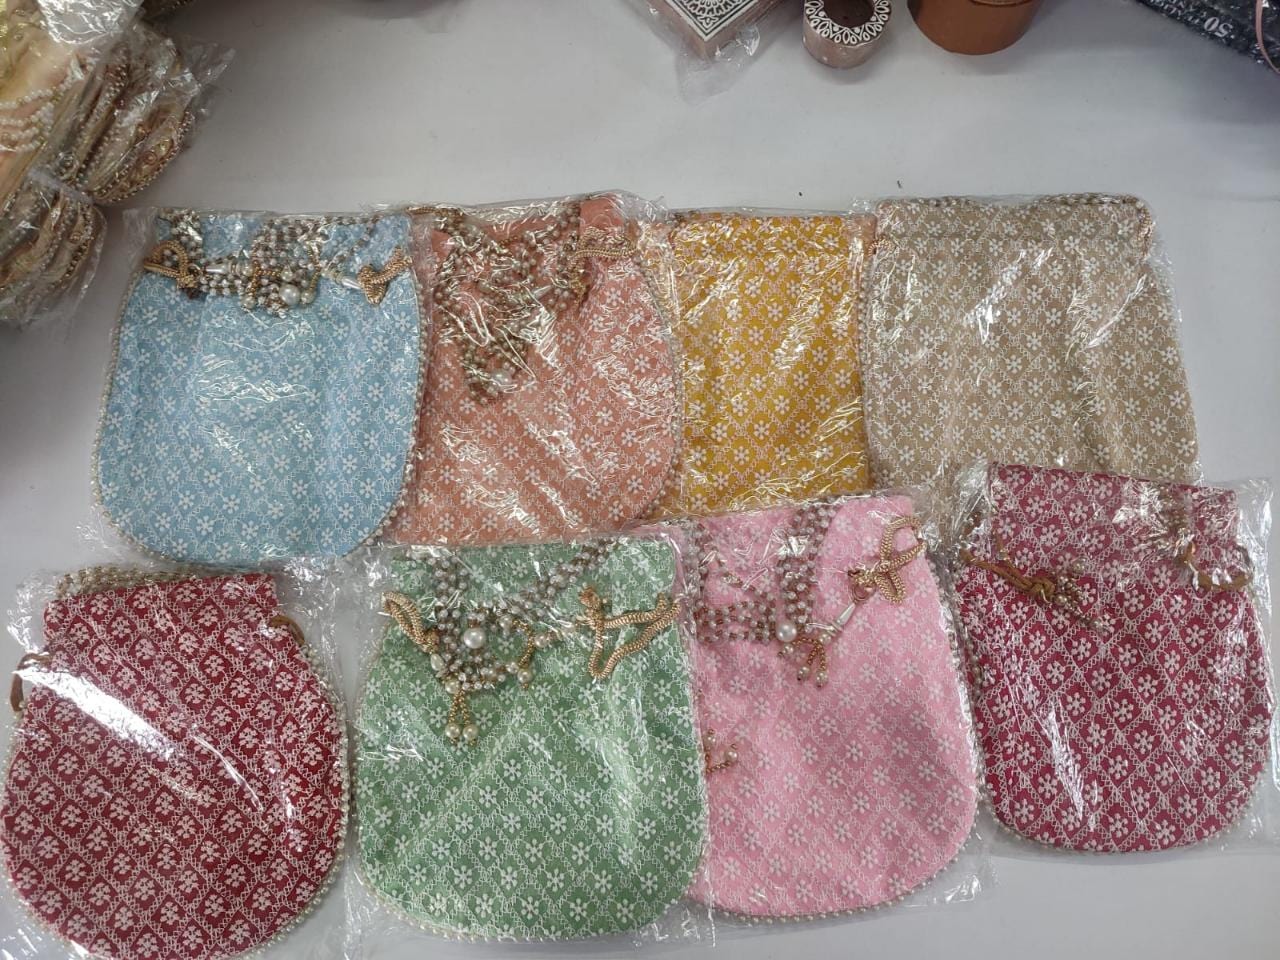 LAMANSH ® Women's Potli Bag Pack of 10 / Assorted Colour Patterns LAMANSH 10 Pcs Potli bags for women handbags traditional Indian Wristlet with Drawstring Ethnic Embroidery Women Fashion Potli